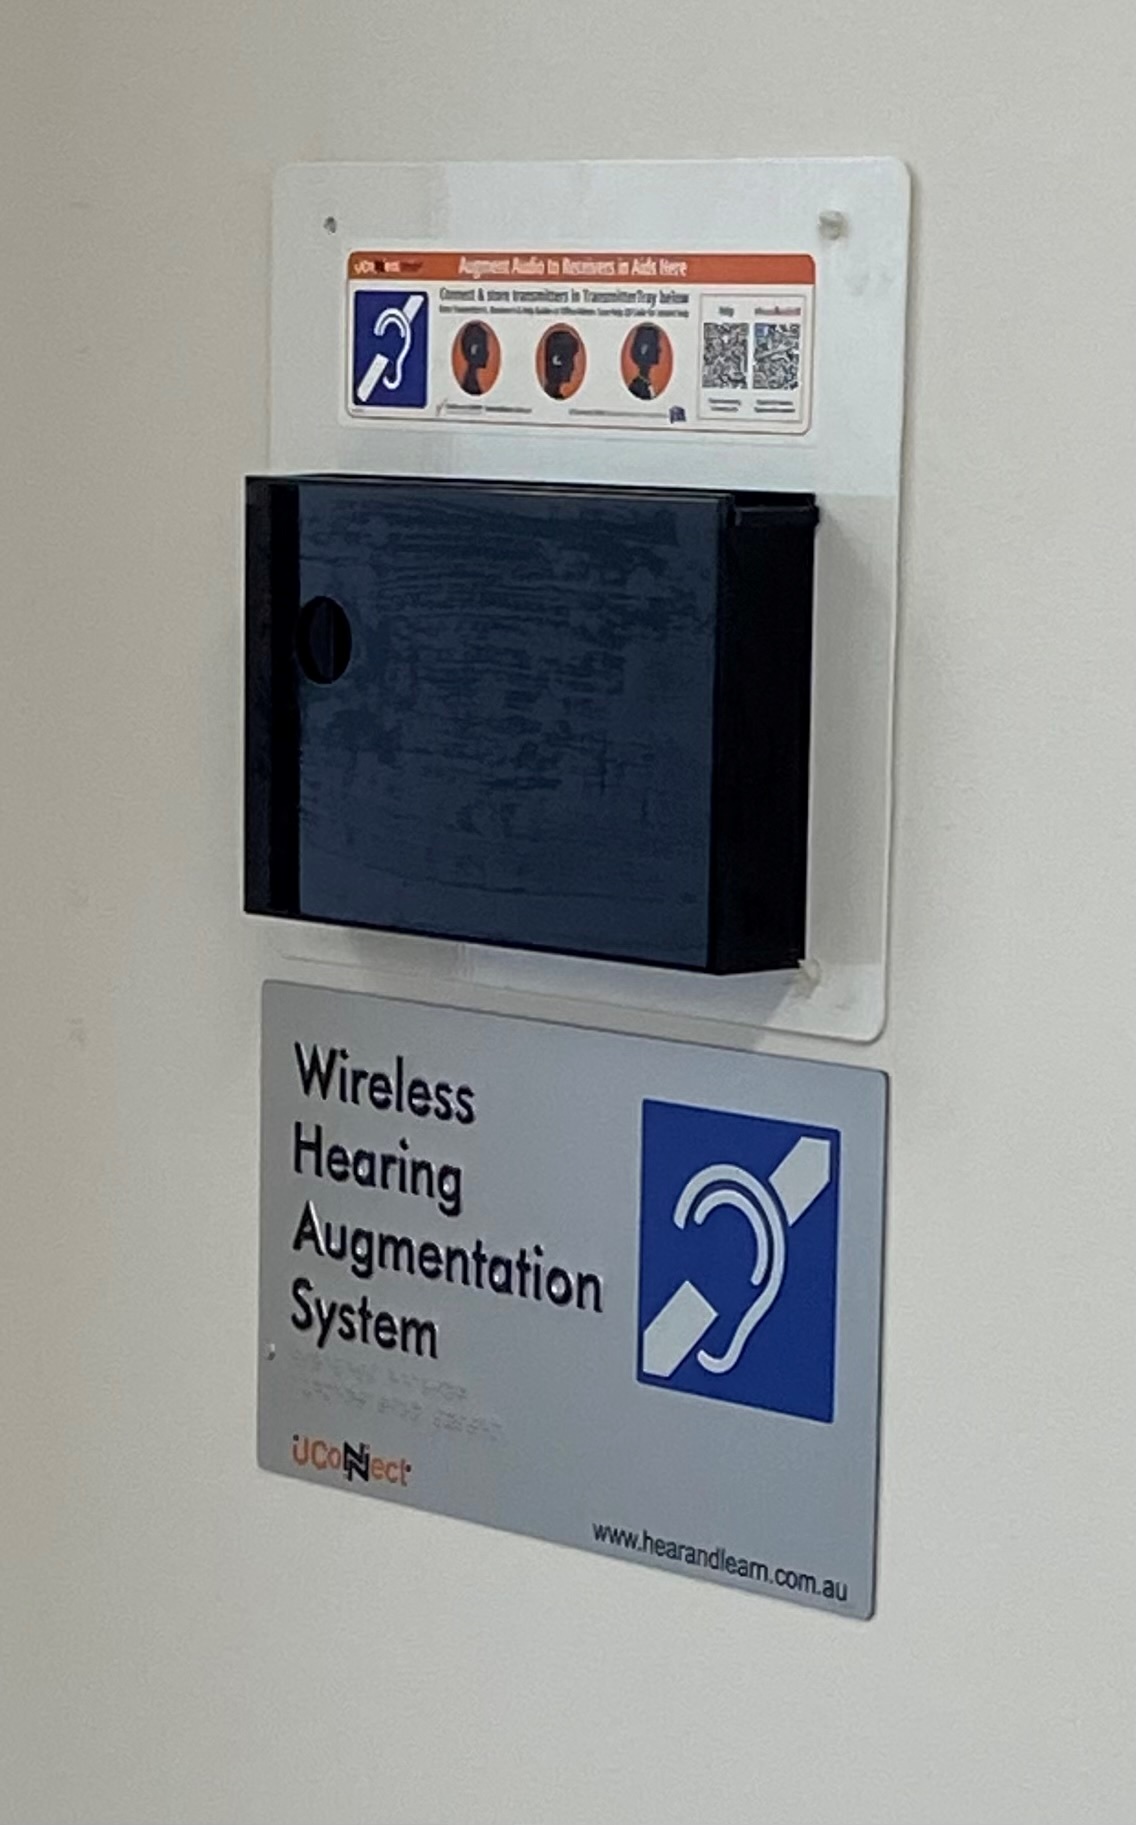 Wireless Hearing Augmentation System Installed